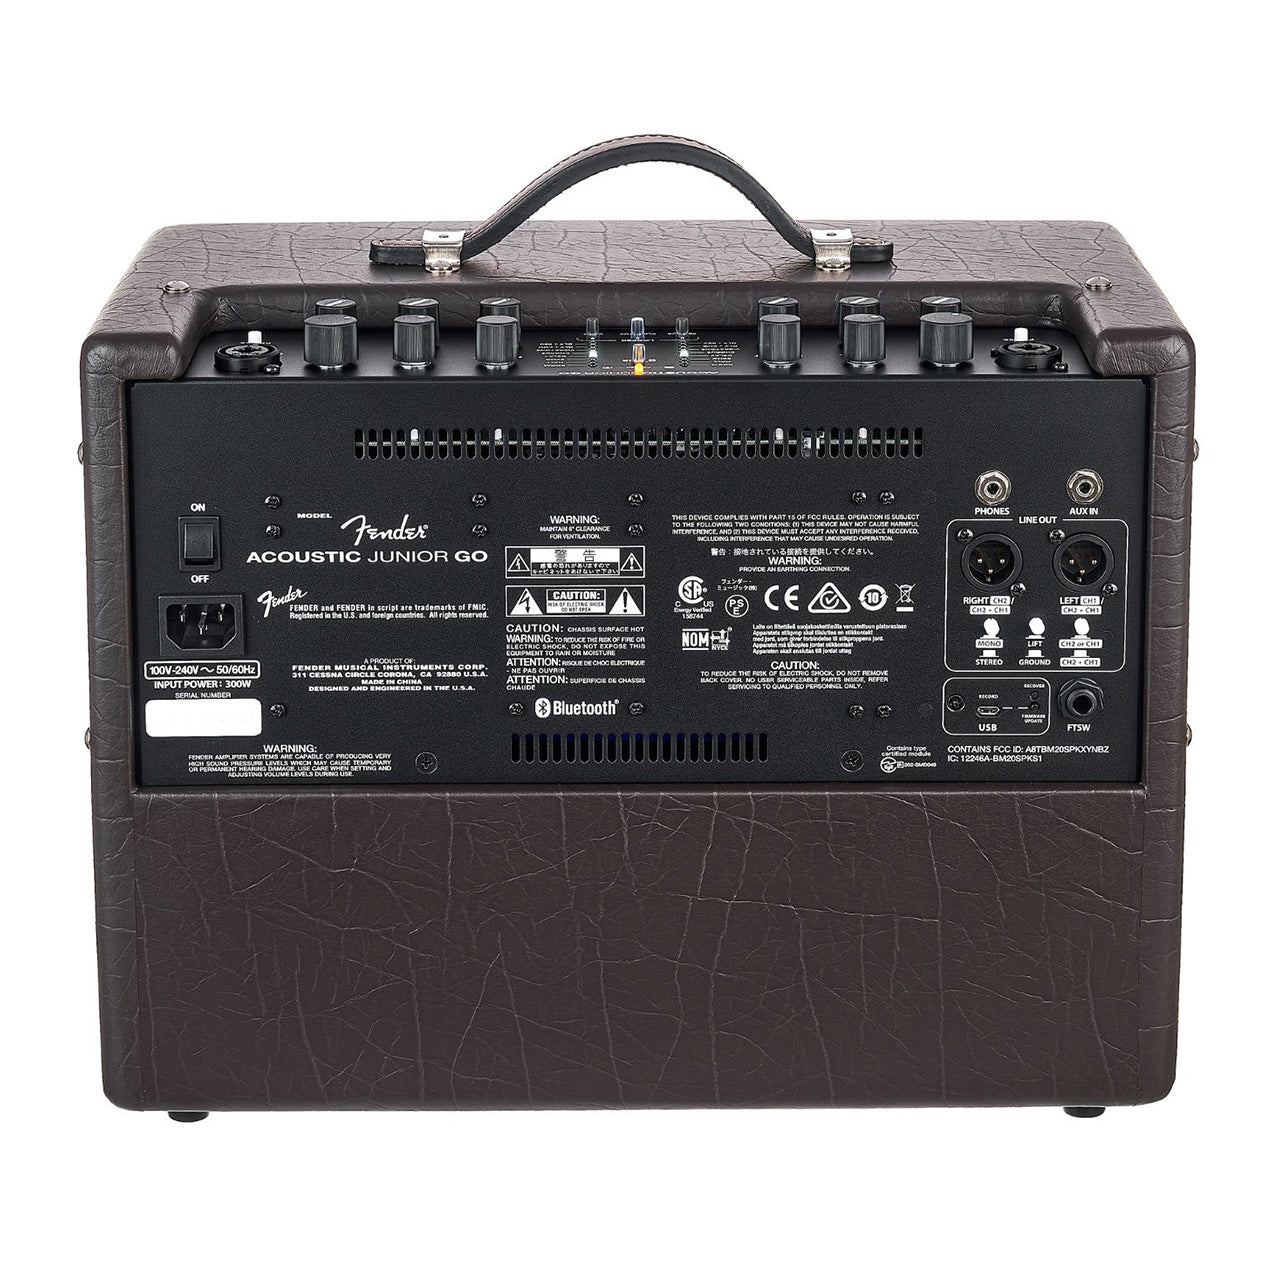 Fender Acoustic Junior GO Jr 100 Watt 1x8" Guitar Combo Amplifier Rechargeable 230V EUR with Bluetooth, Looper, Tweeter, 5h Playtime (Dark Brown)